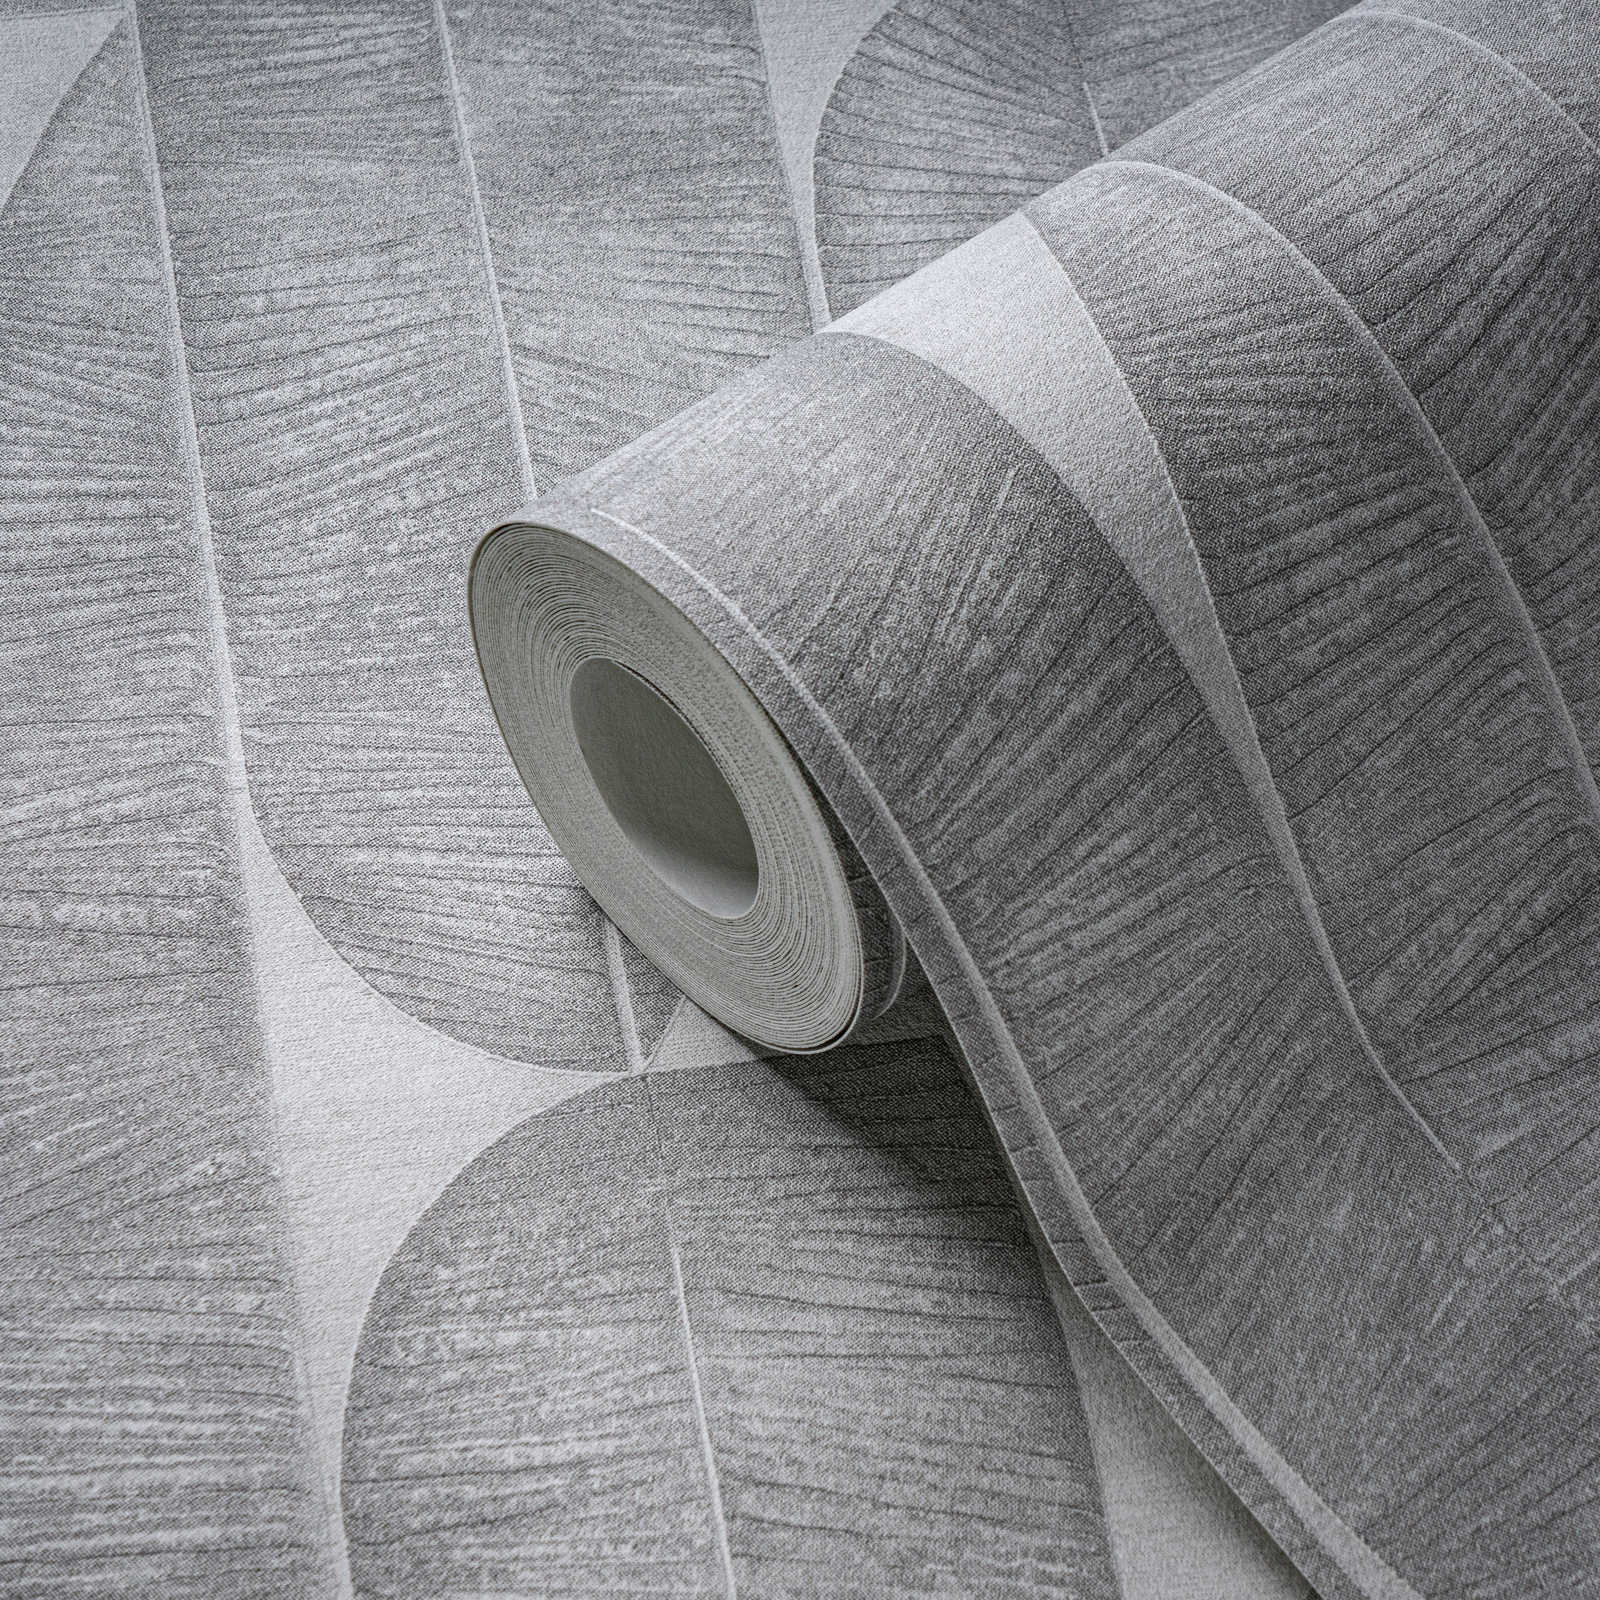             Wallpaper with geometric leaf pattern - grey
        